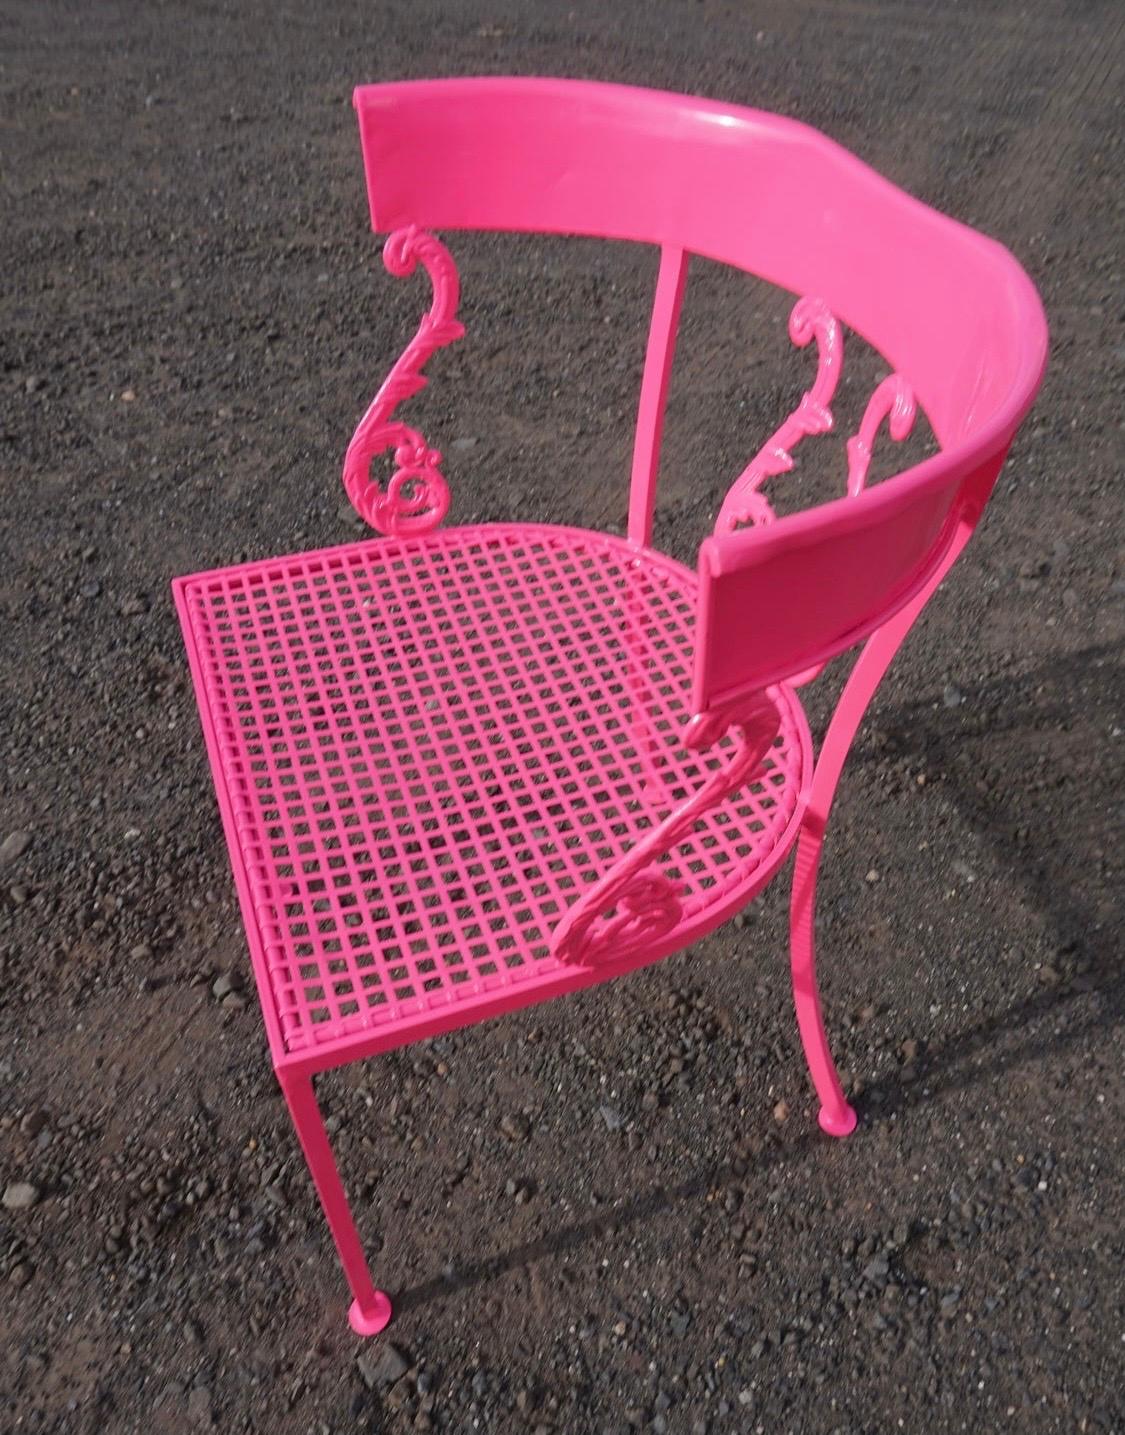 pink patio furniture